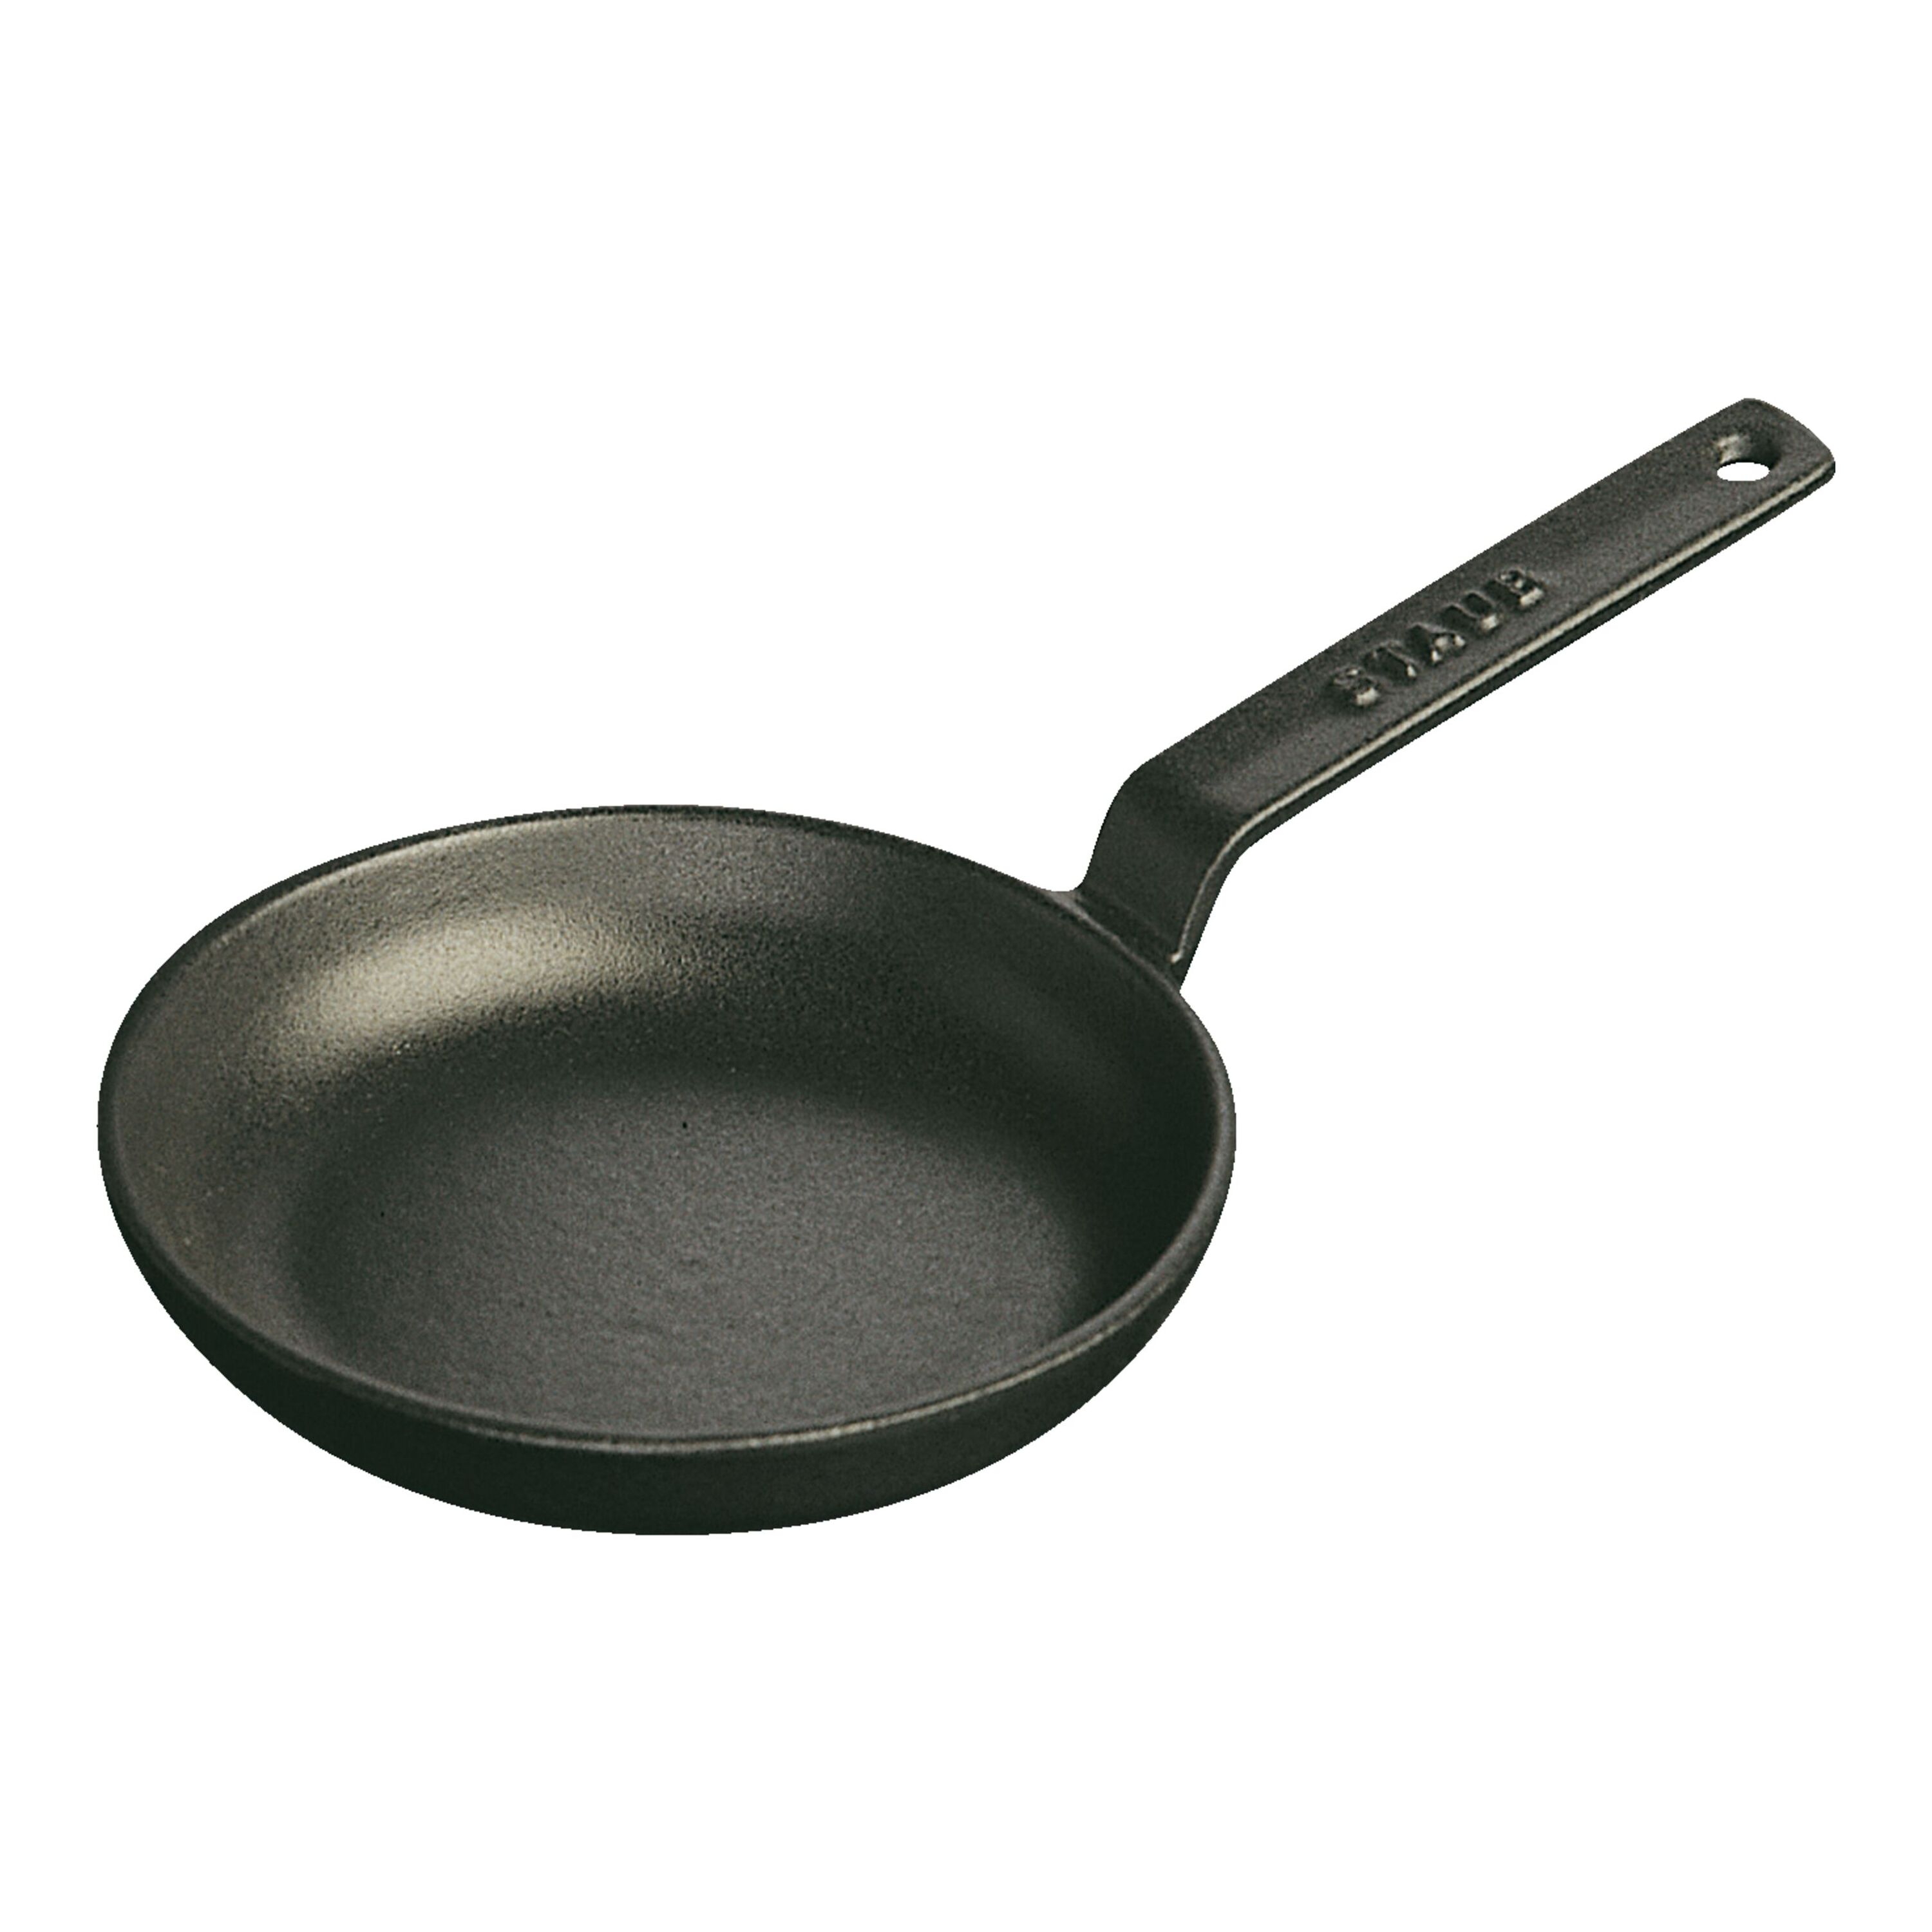 Cast Iron Mini Small Shallow Skillet Griddle Pan Pancake 5 Diameter 0.5  Depth